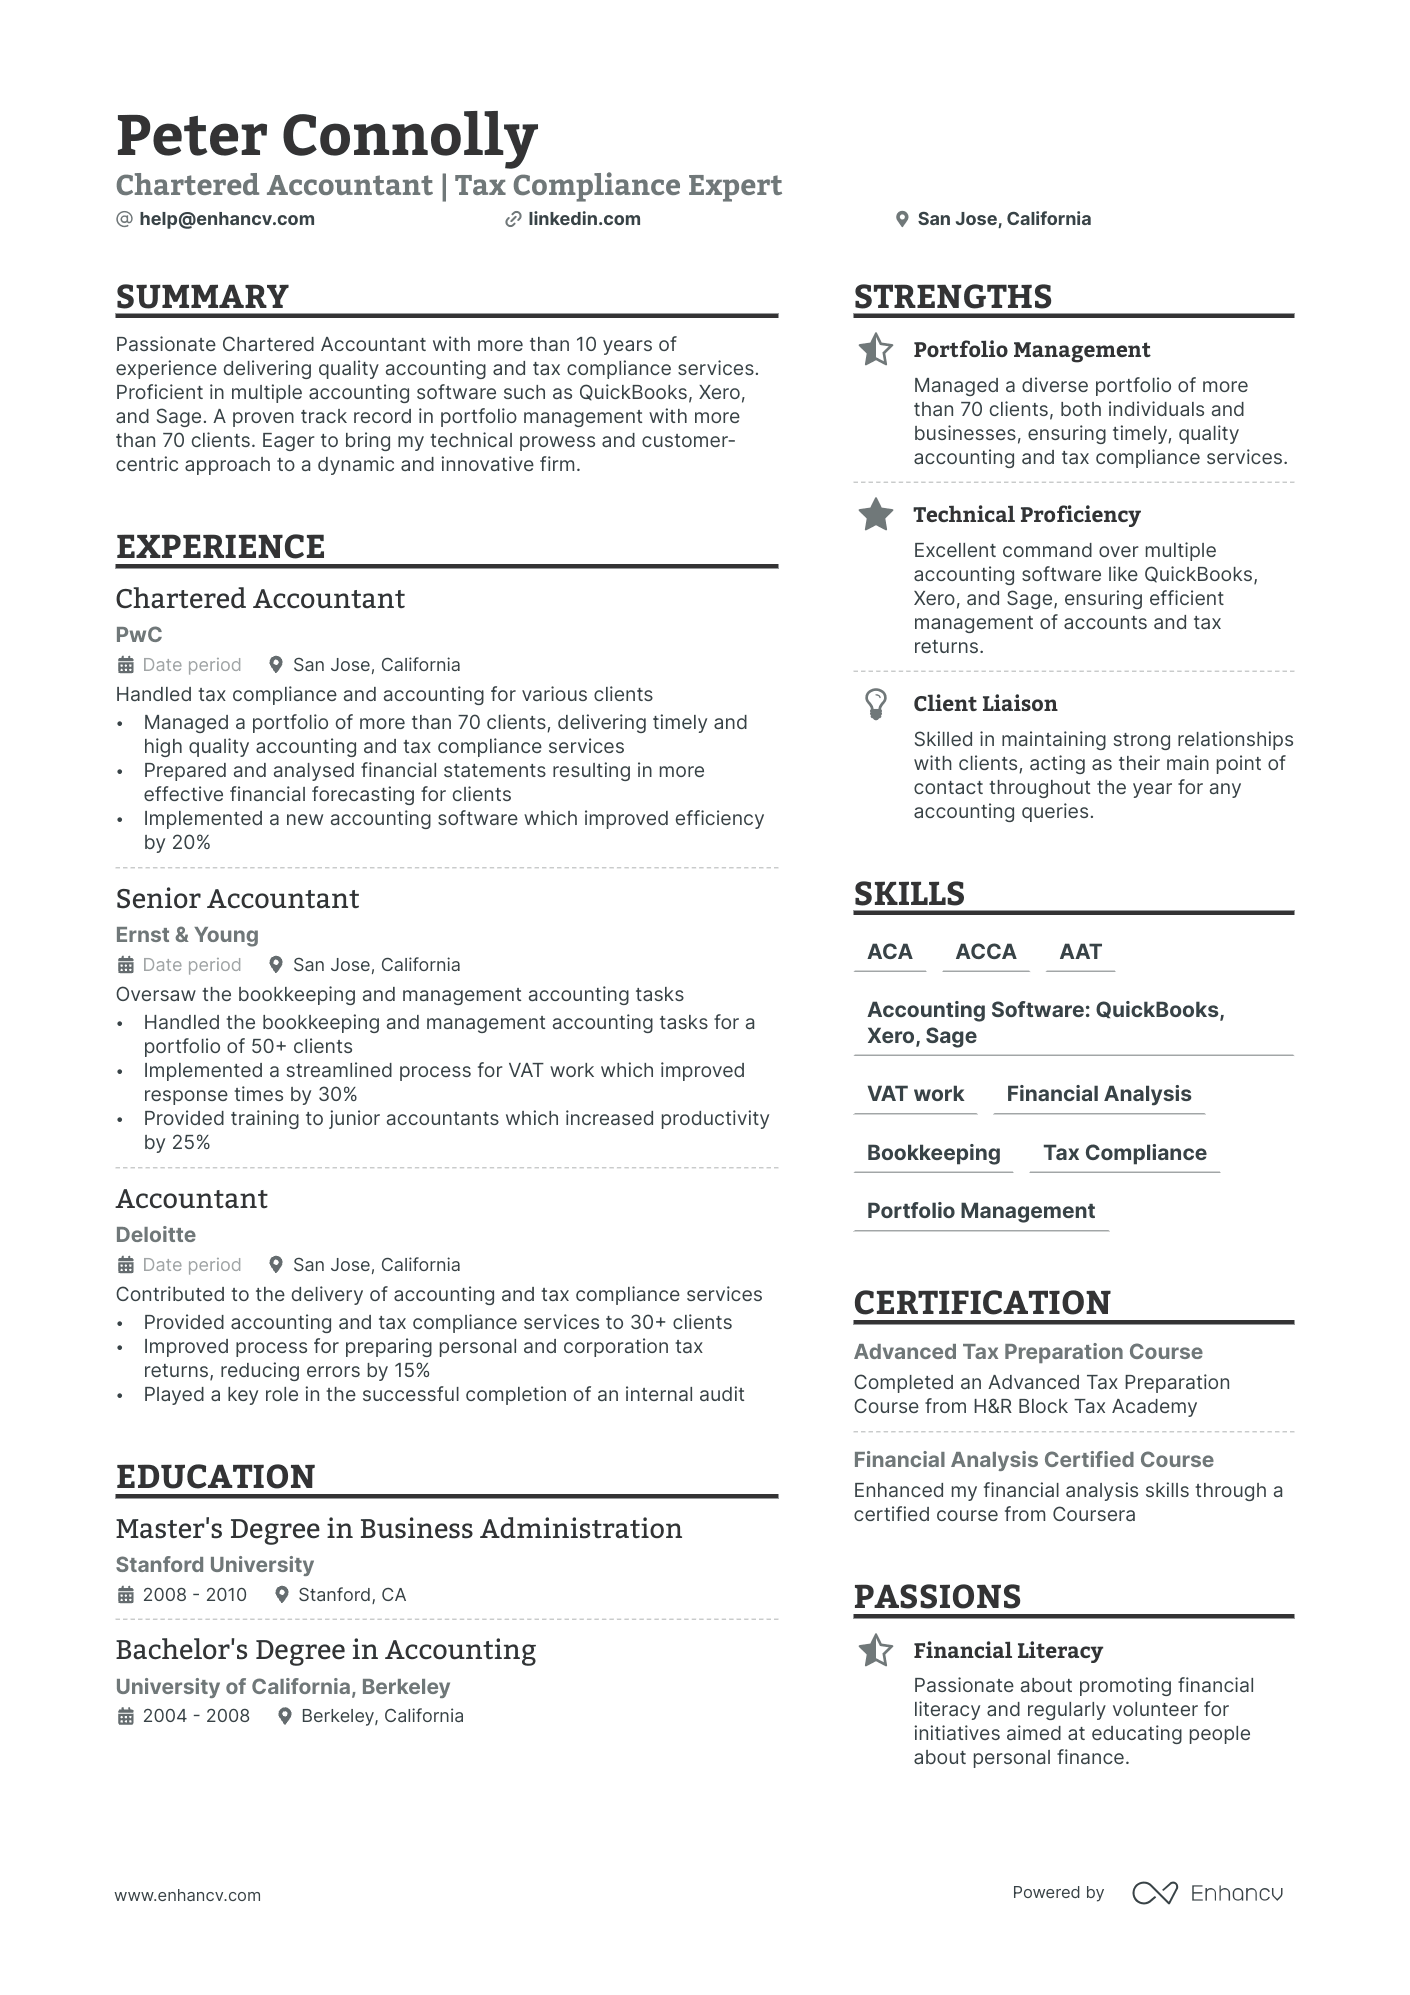 Senior Accountant resume example